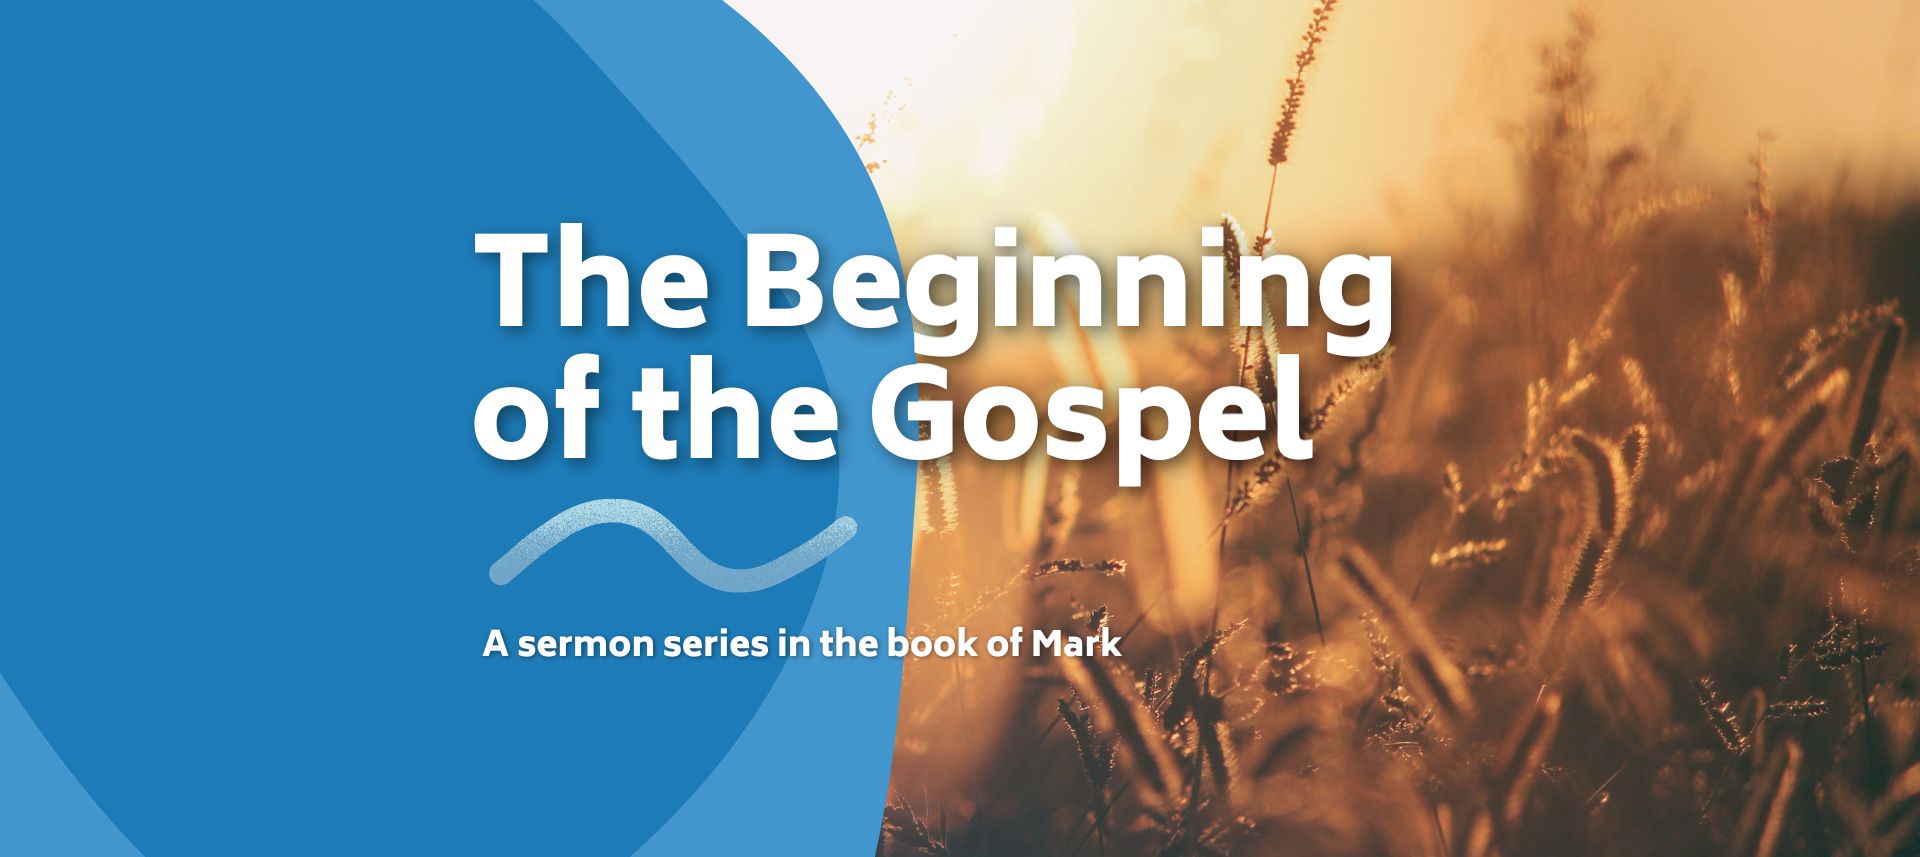  Mark - The Beginning of the Gospel